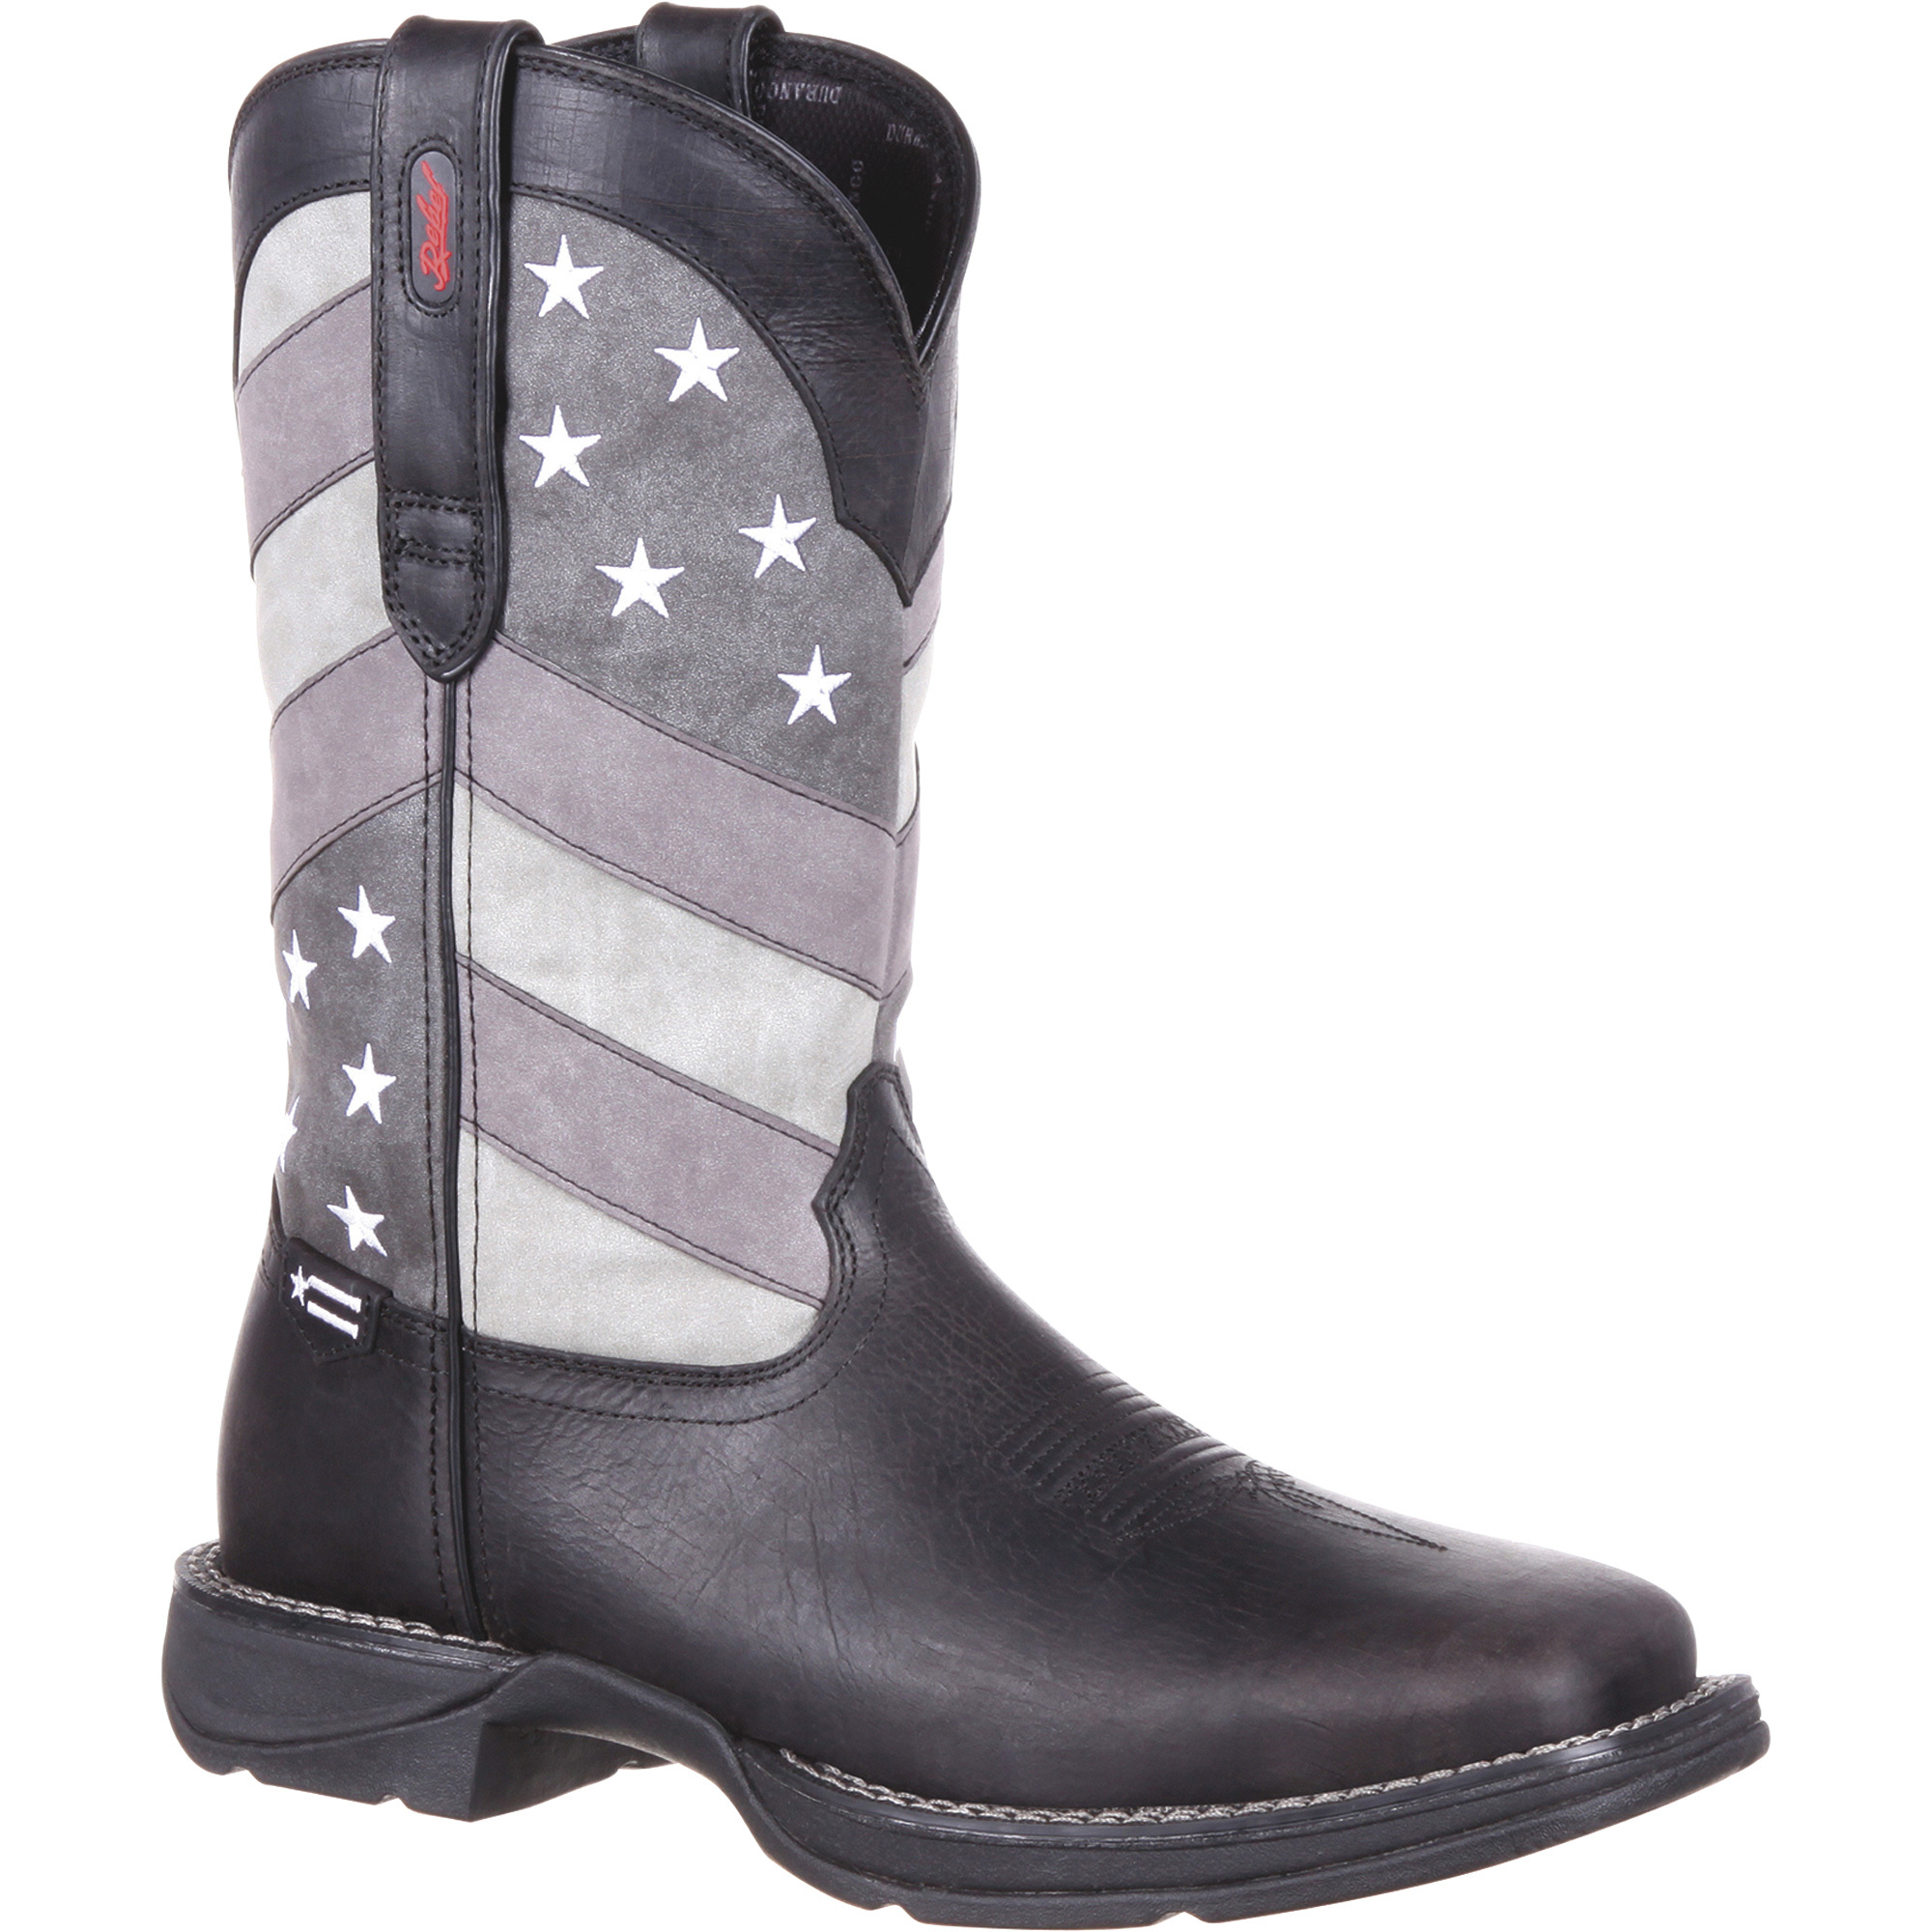 Durango Men's 12Inch Rebel Western Work Boots â Black/Gray Flag, Size 8 1/2 Wide, Model DDB0125